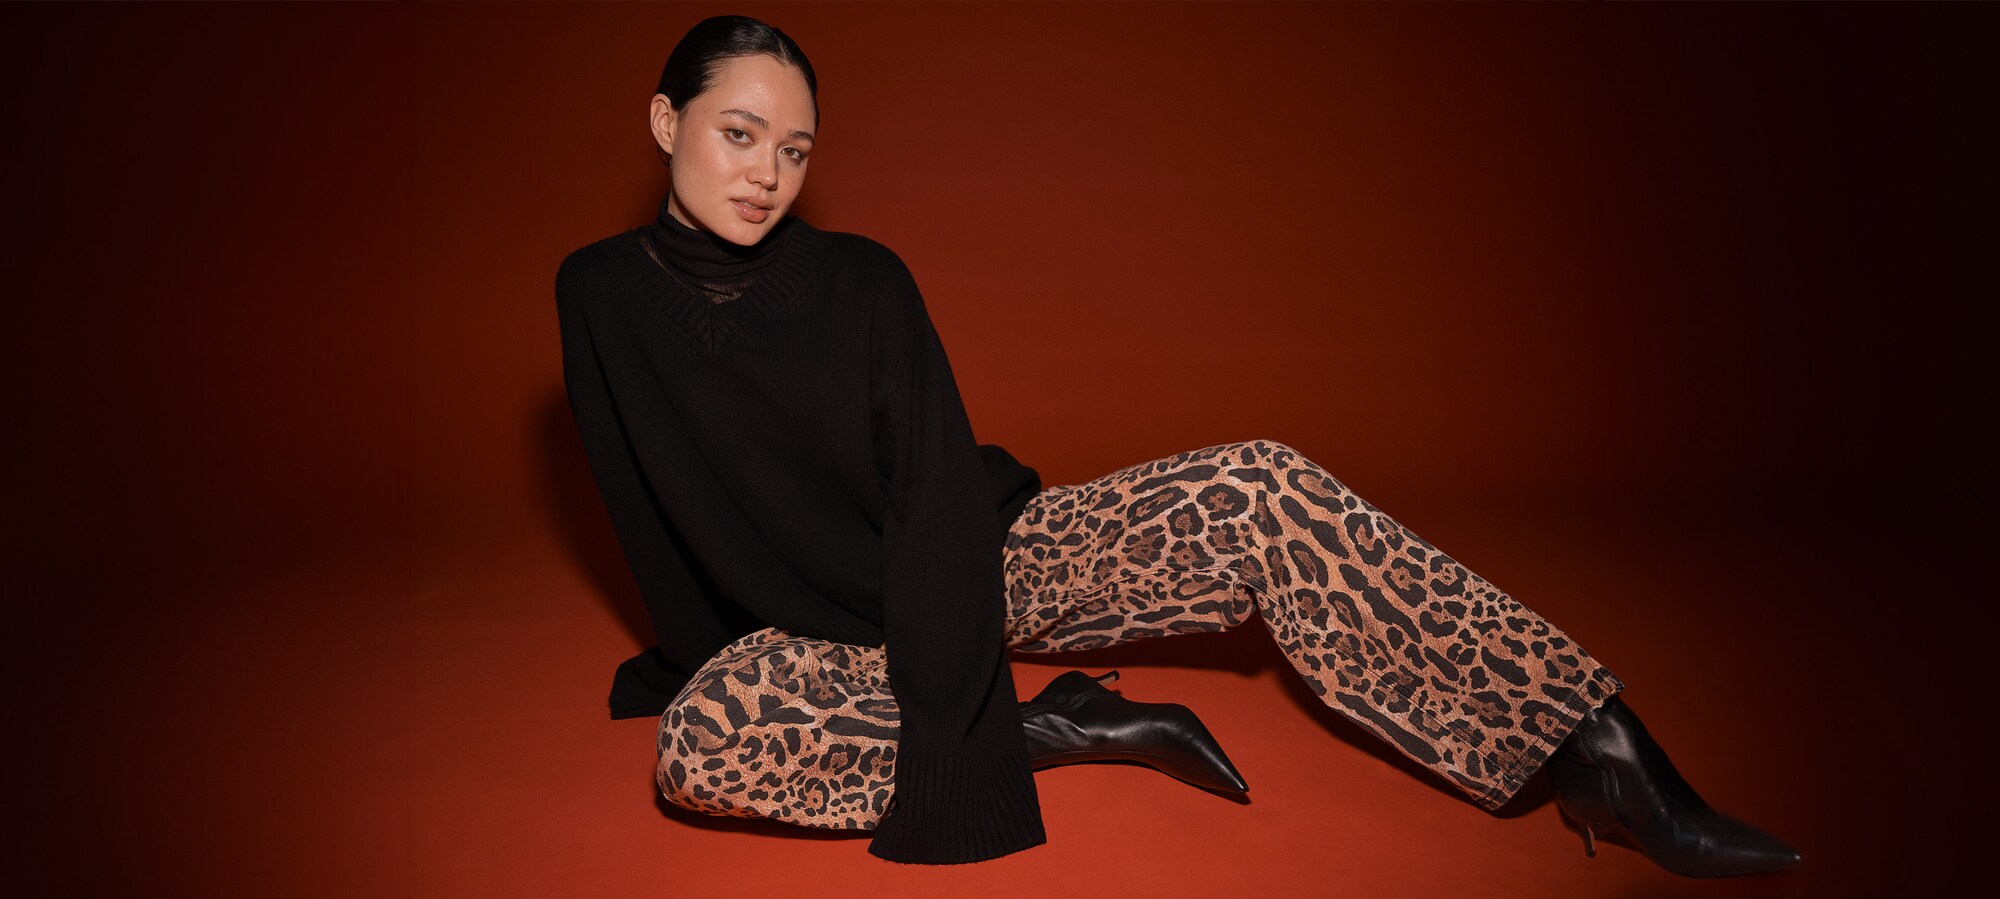 Master the trend Πώς να συνδυάσεις το leopard print